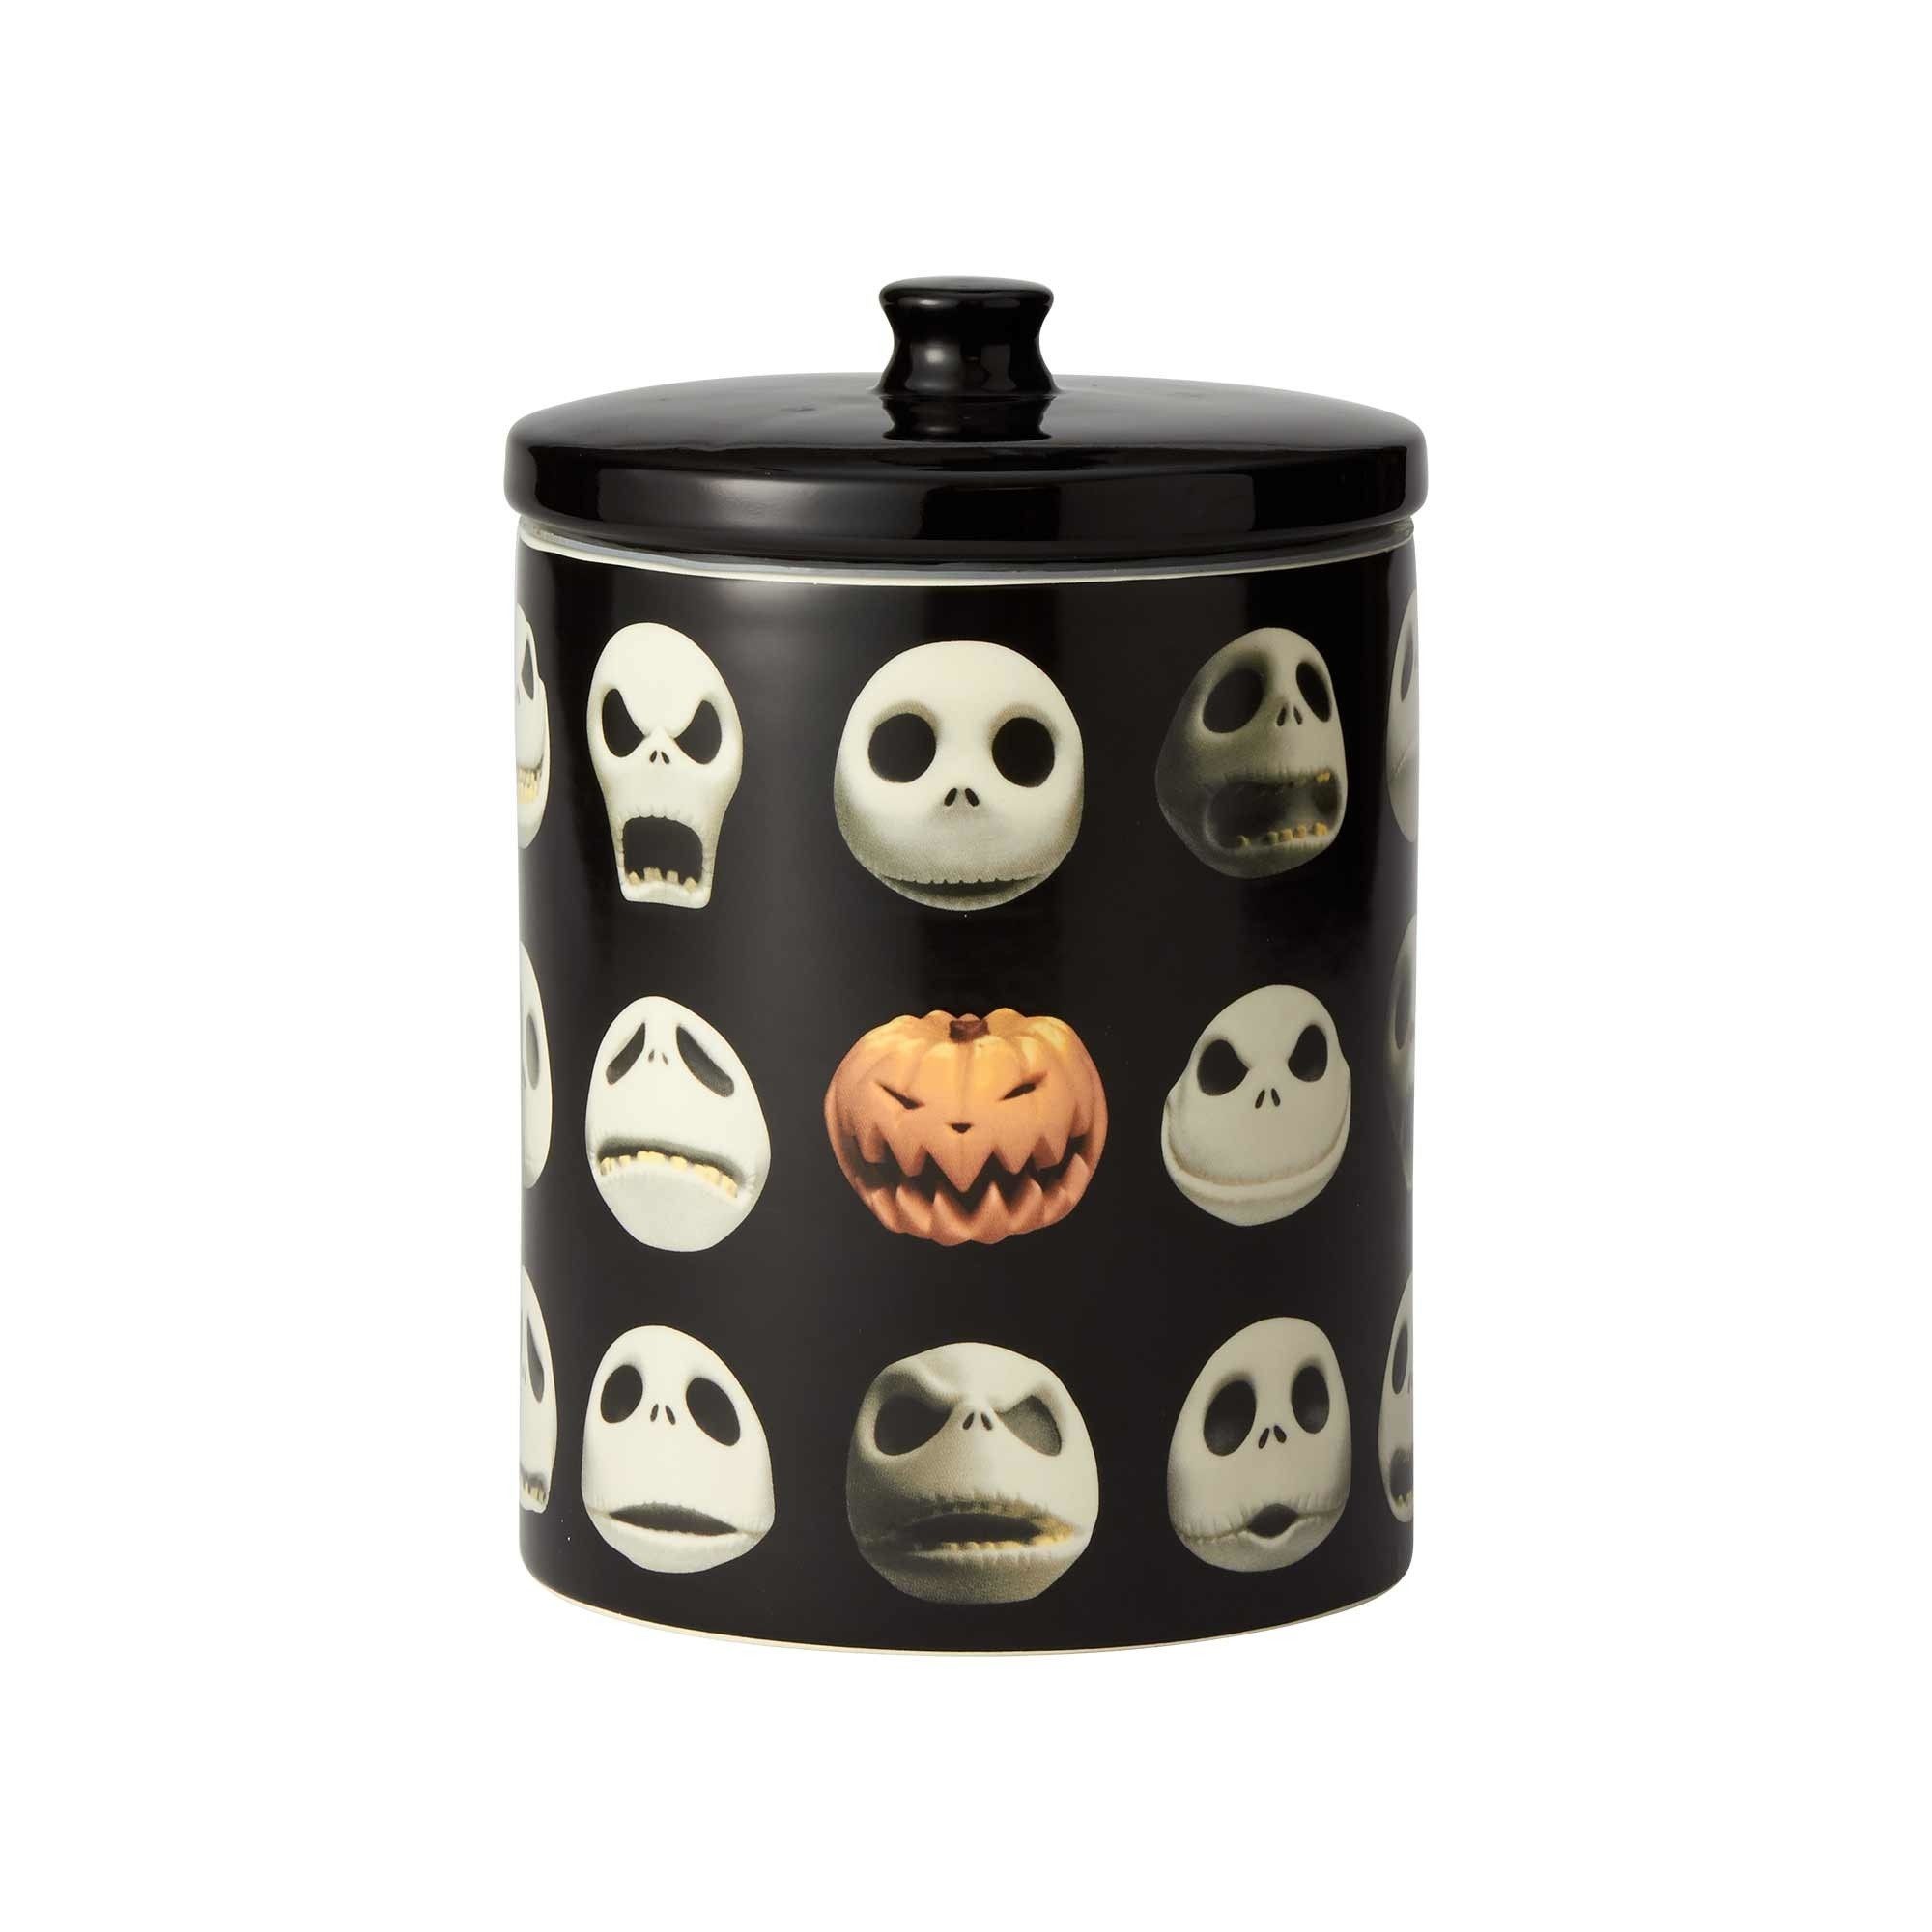 Enesco Disney Ceramics Nightmare Before Christmas Jack Skellington Cookie Jar Canister, 9.25 inch, B | Amazon (US)